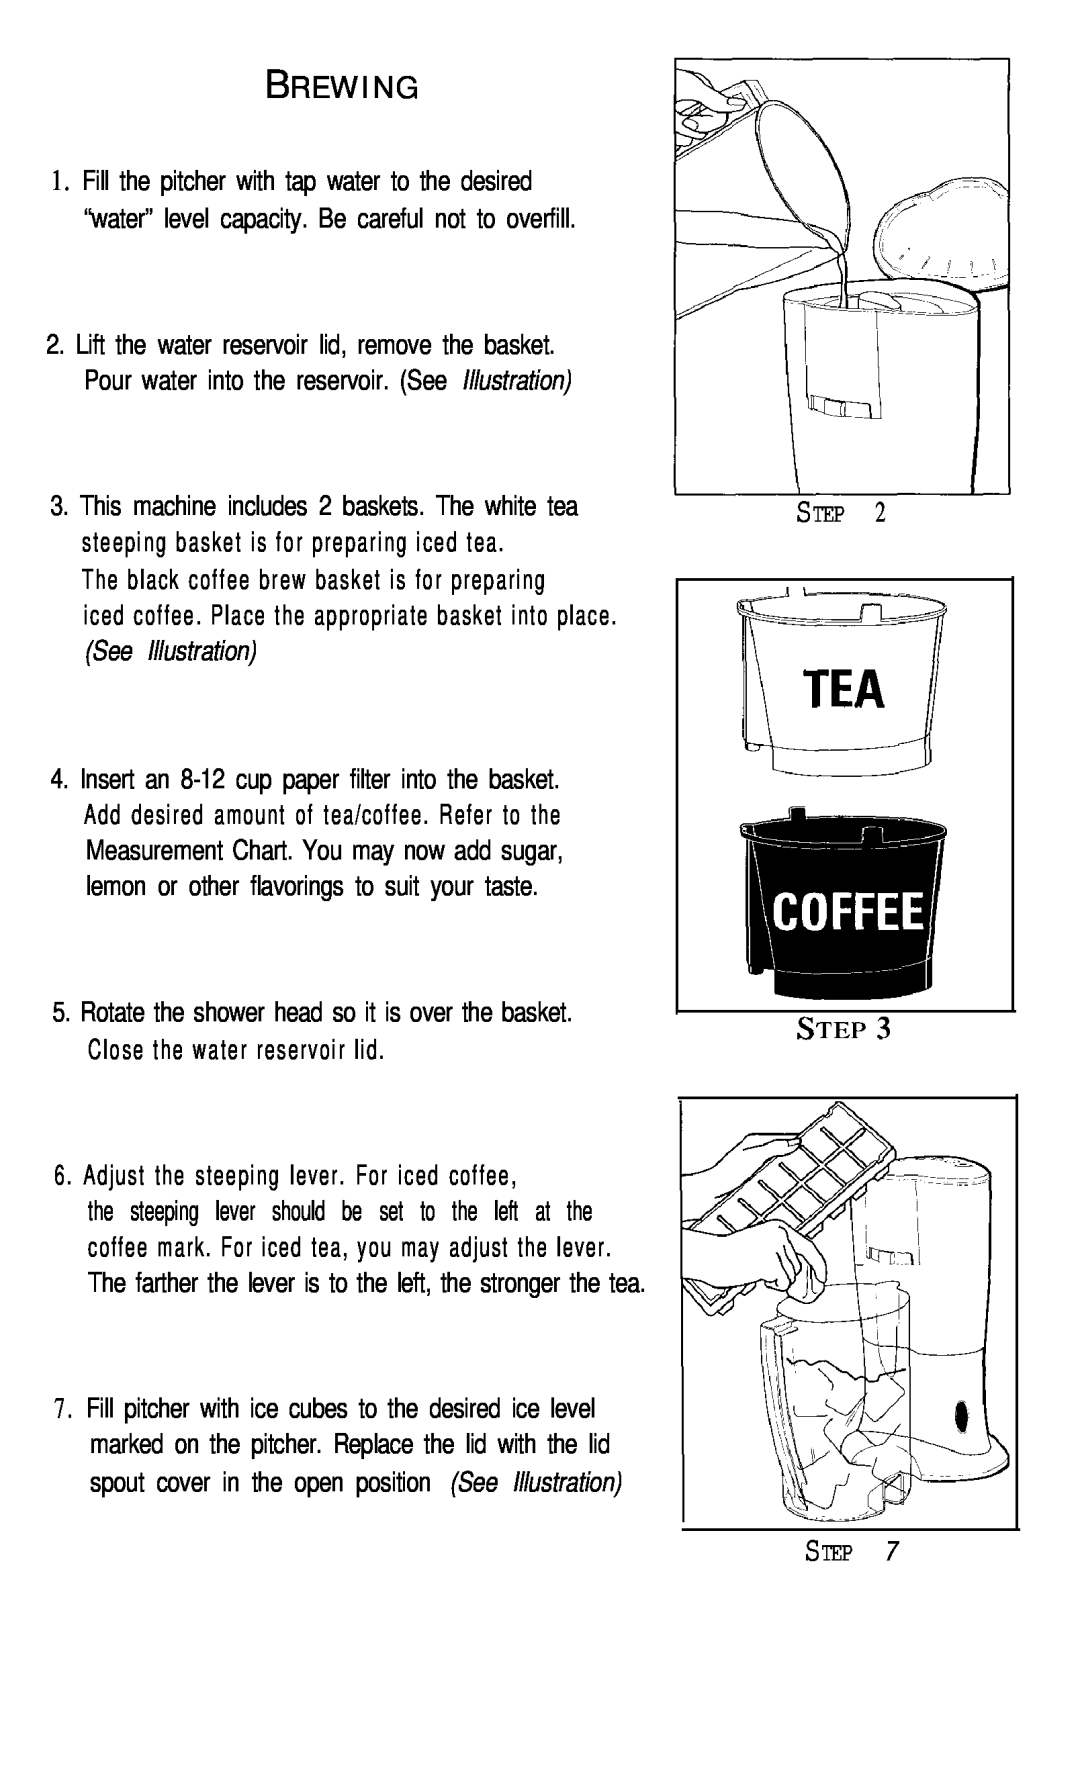 Mr. Coffee TM20 instruction manual Close the water reservoir lid, B R E W I N G, Steps, See Illustration 